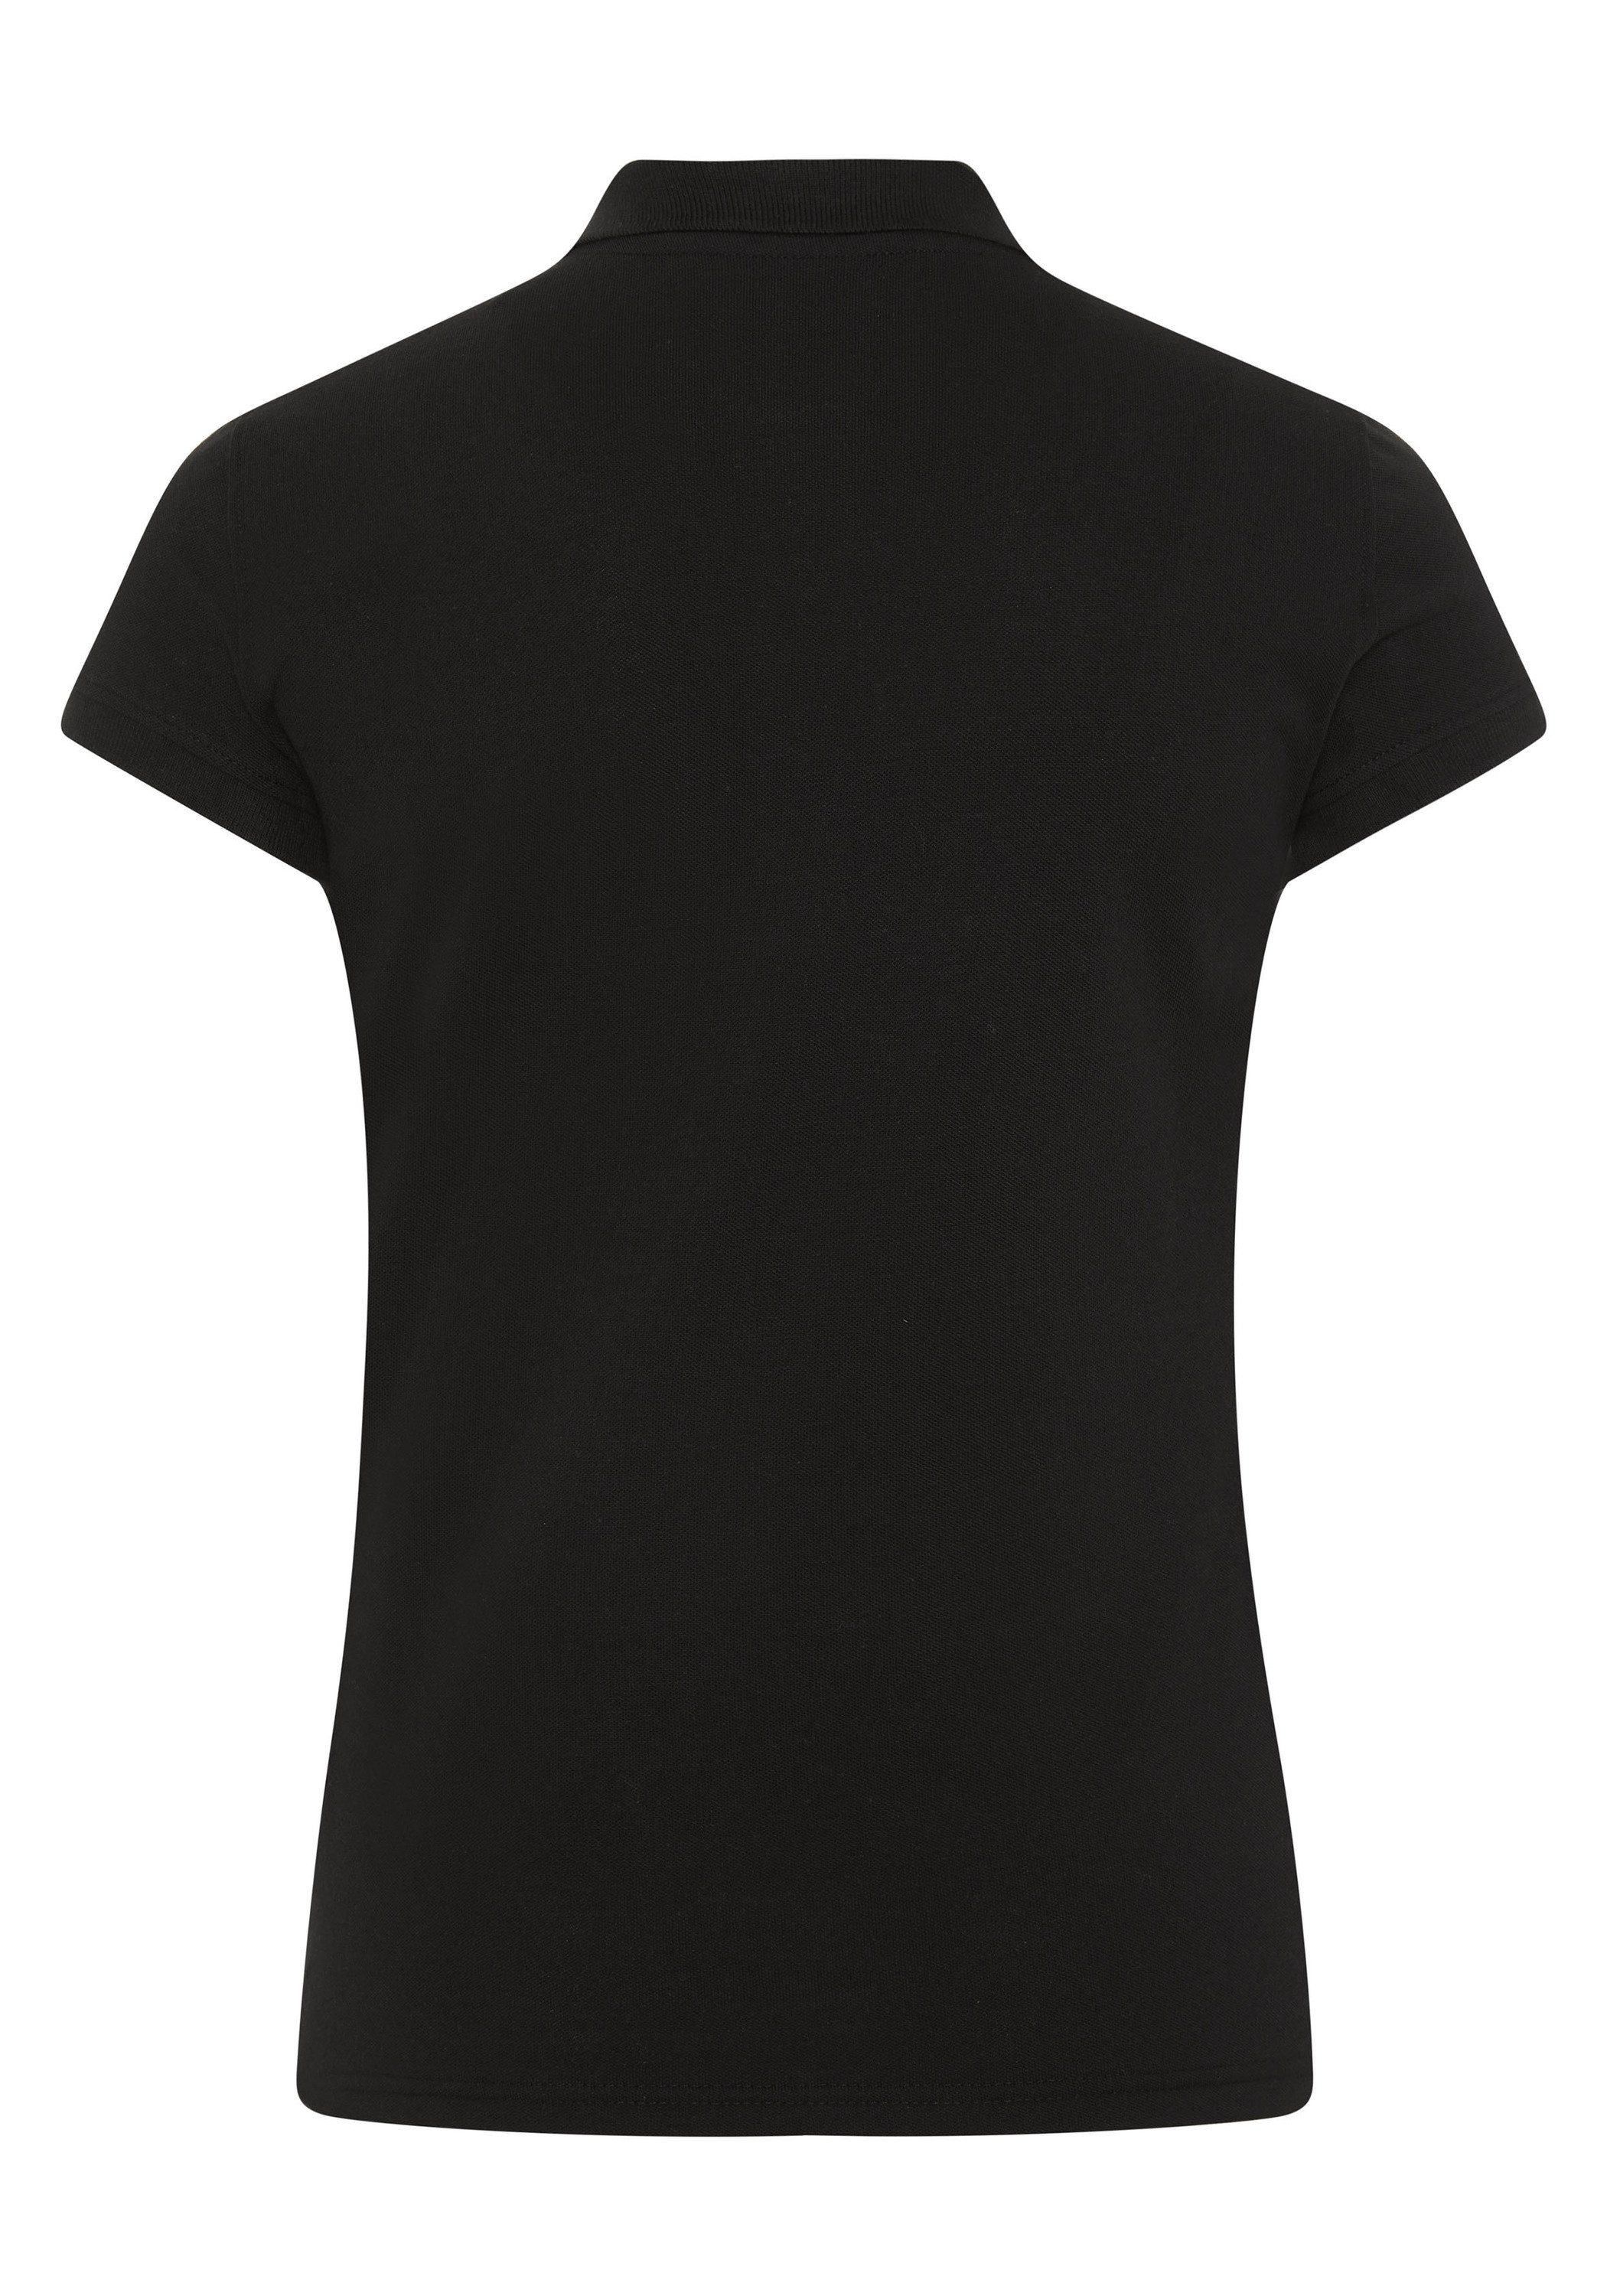 strapazierfähigem Material Poloshirt Expand schwarz aus